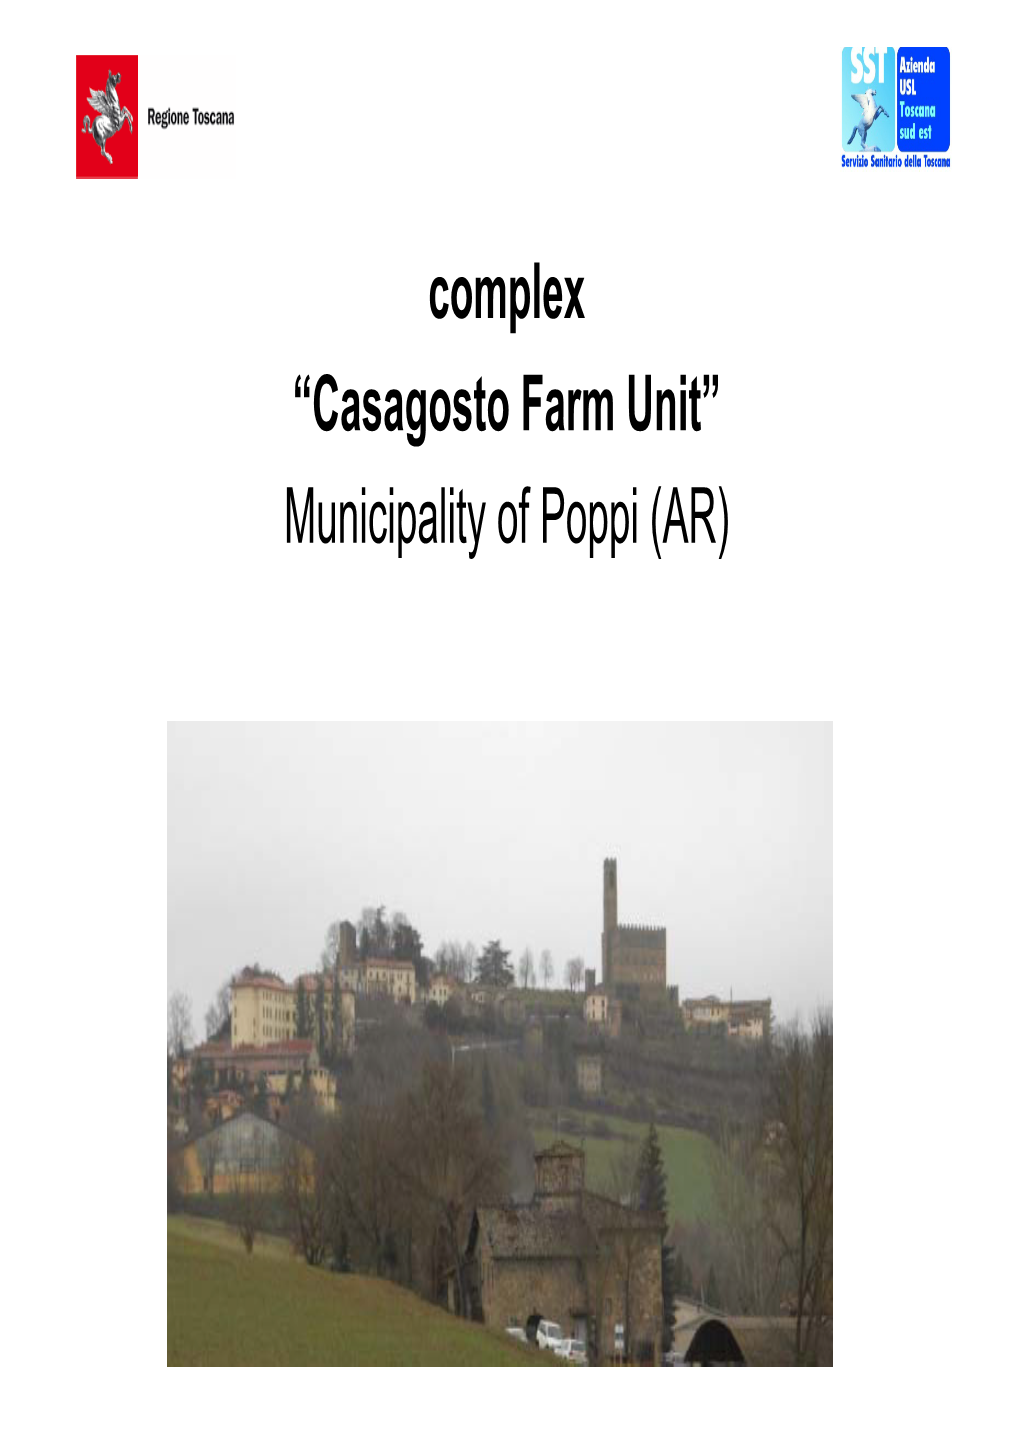 Complex “Casagosto Farm Unit” Municipality of Poppi (AR) Map of Tuscany with Location of Poppi (Arezzo)